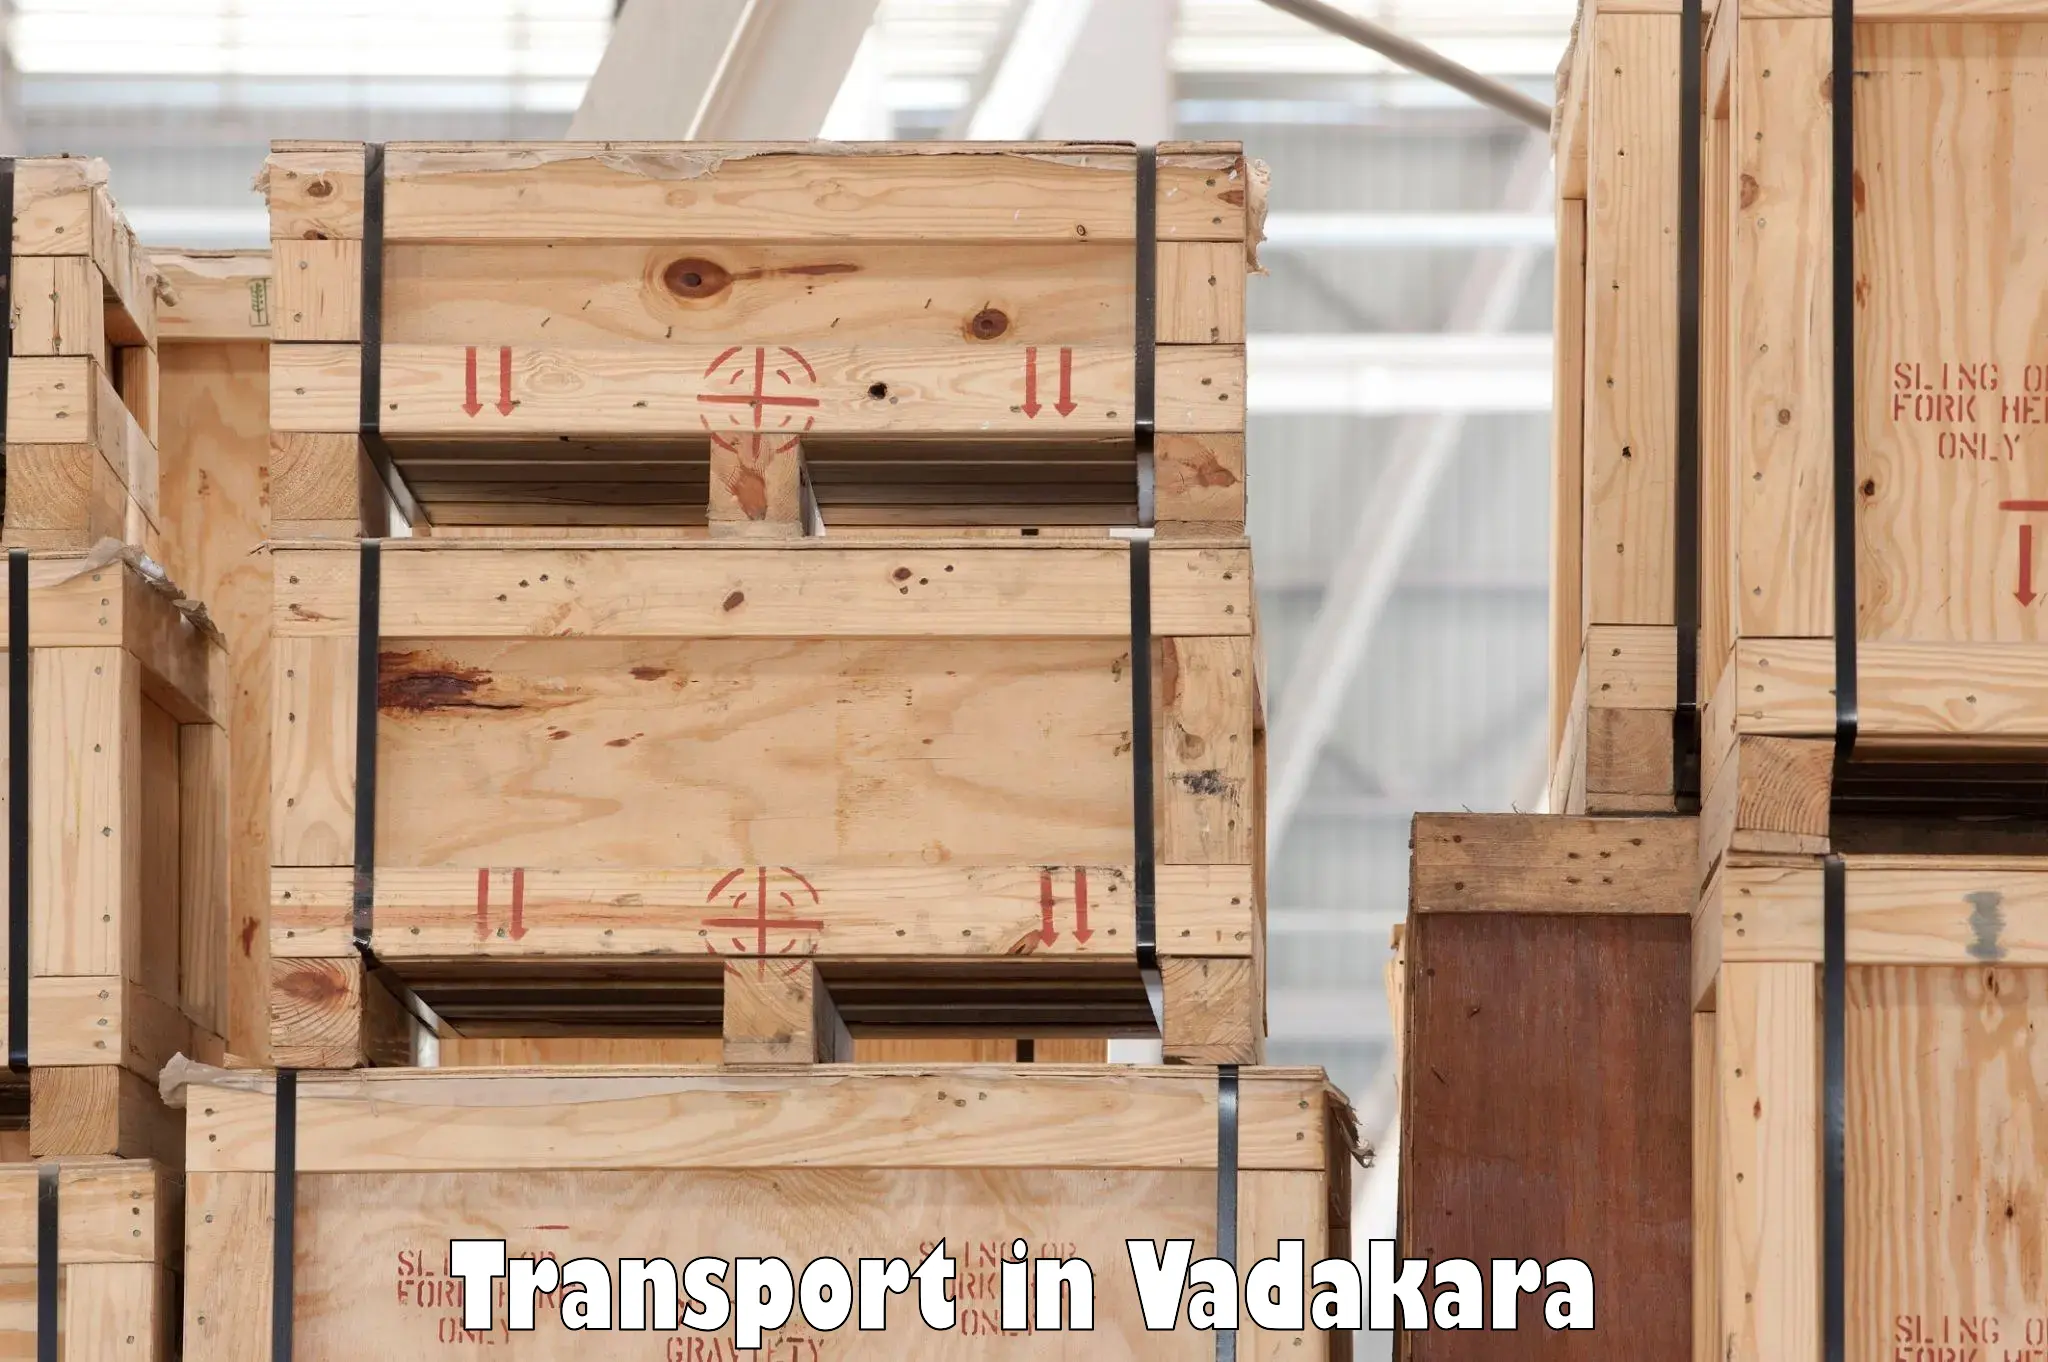 Nearest transport service in Vadakara